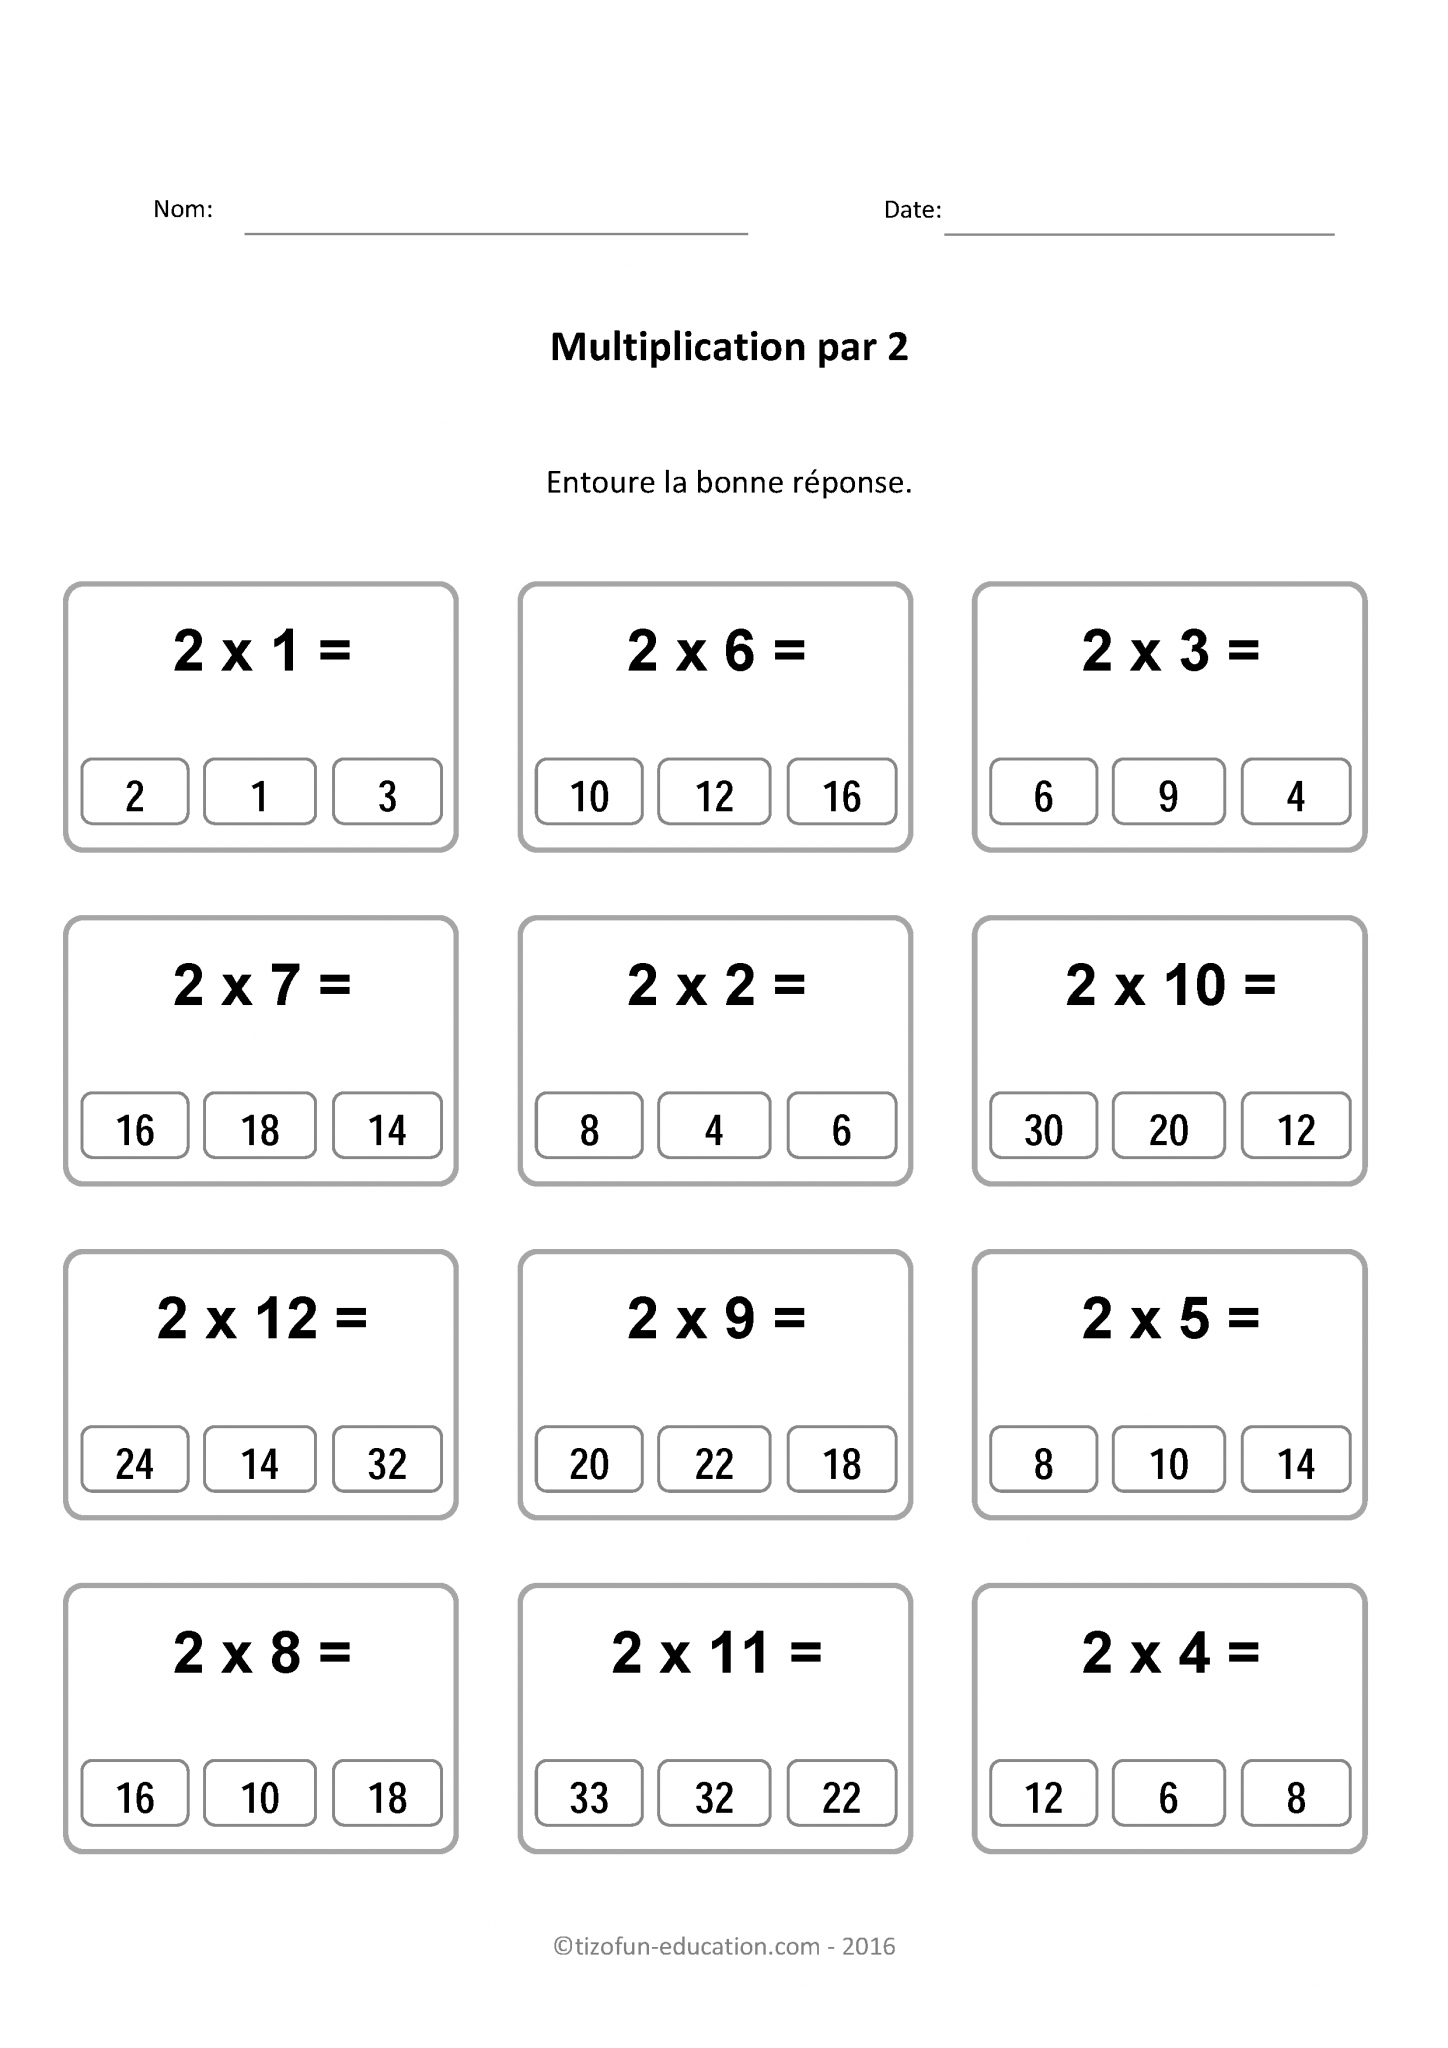 multiplier-par-2-table-de-multiplication-multiplication-dedans-exercice-de-math-a-imprimer